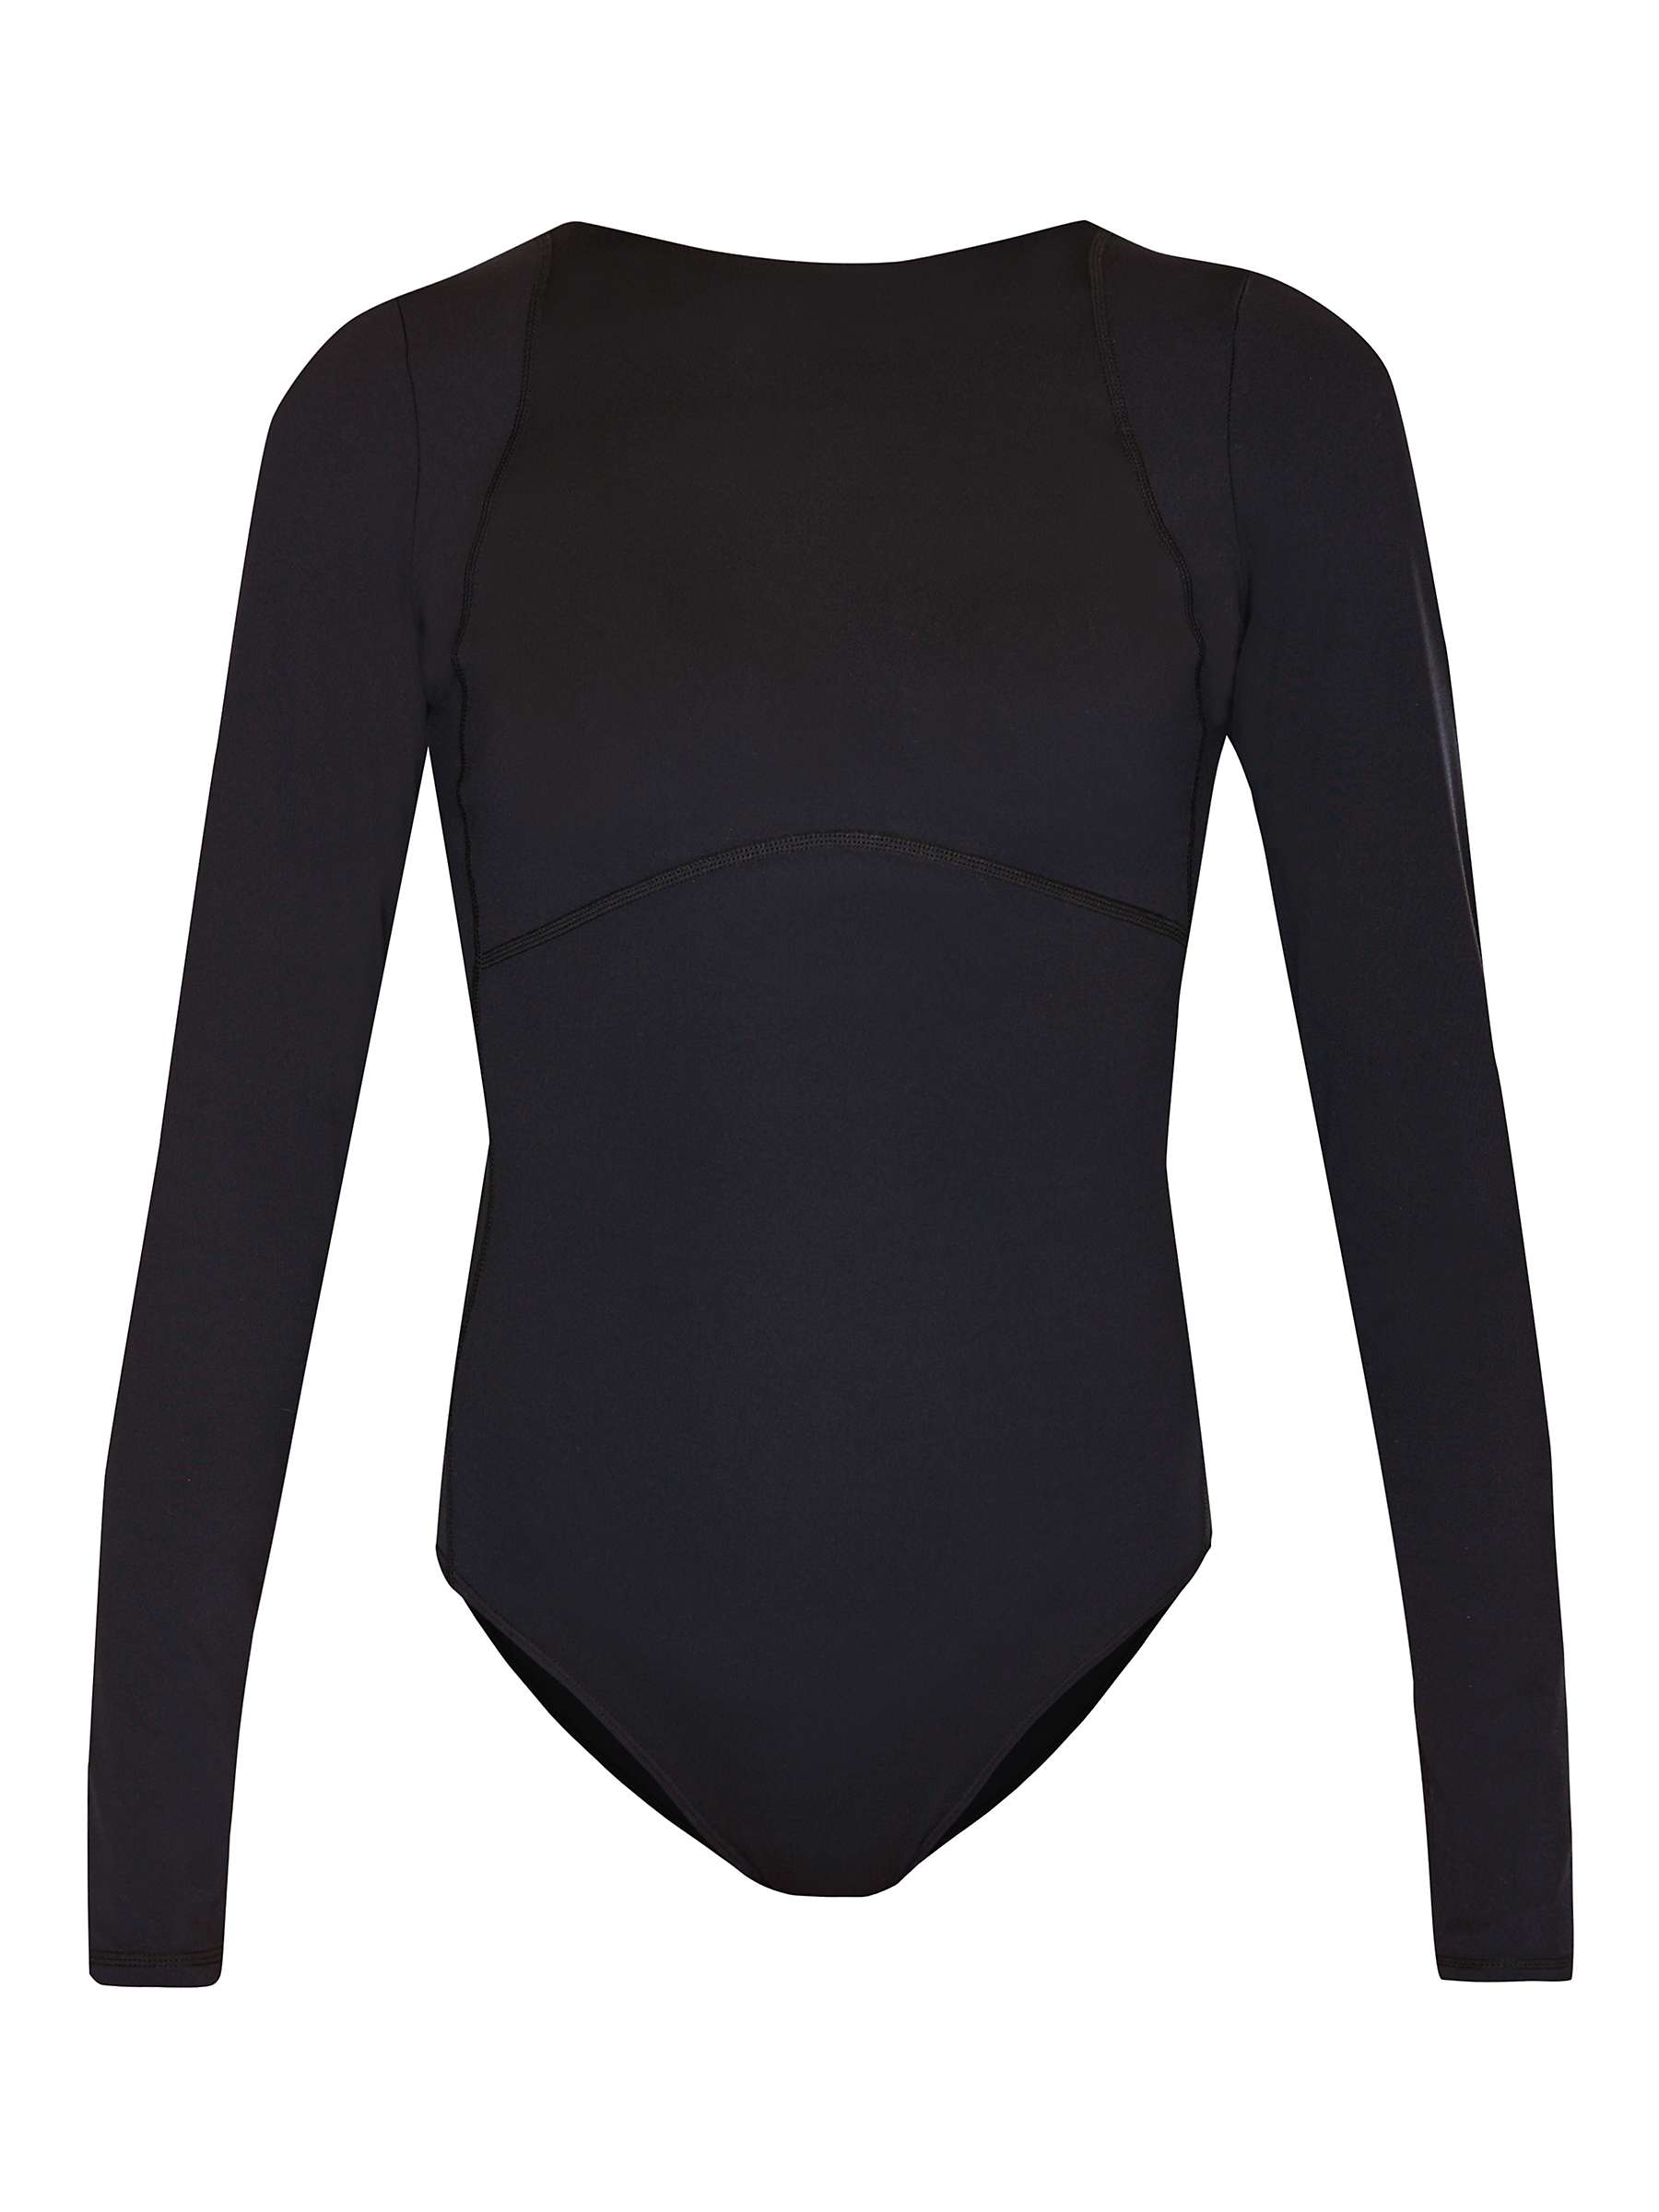 Buy Sweaty Betty All Day Long Sleeve Bodysuit, Black Online at johnlewis.com